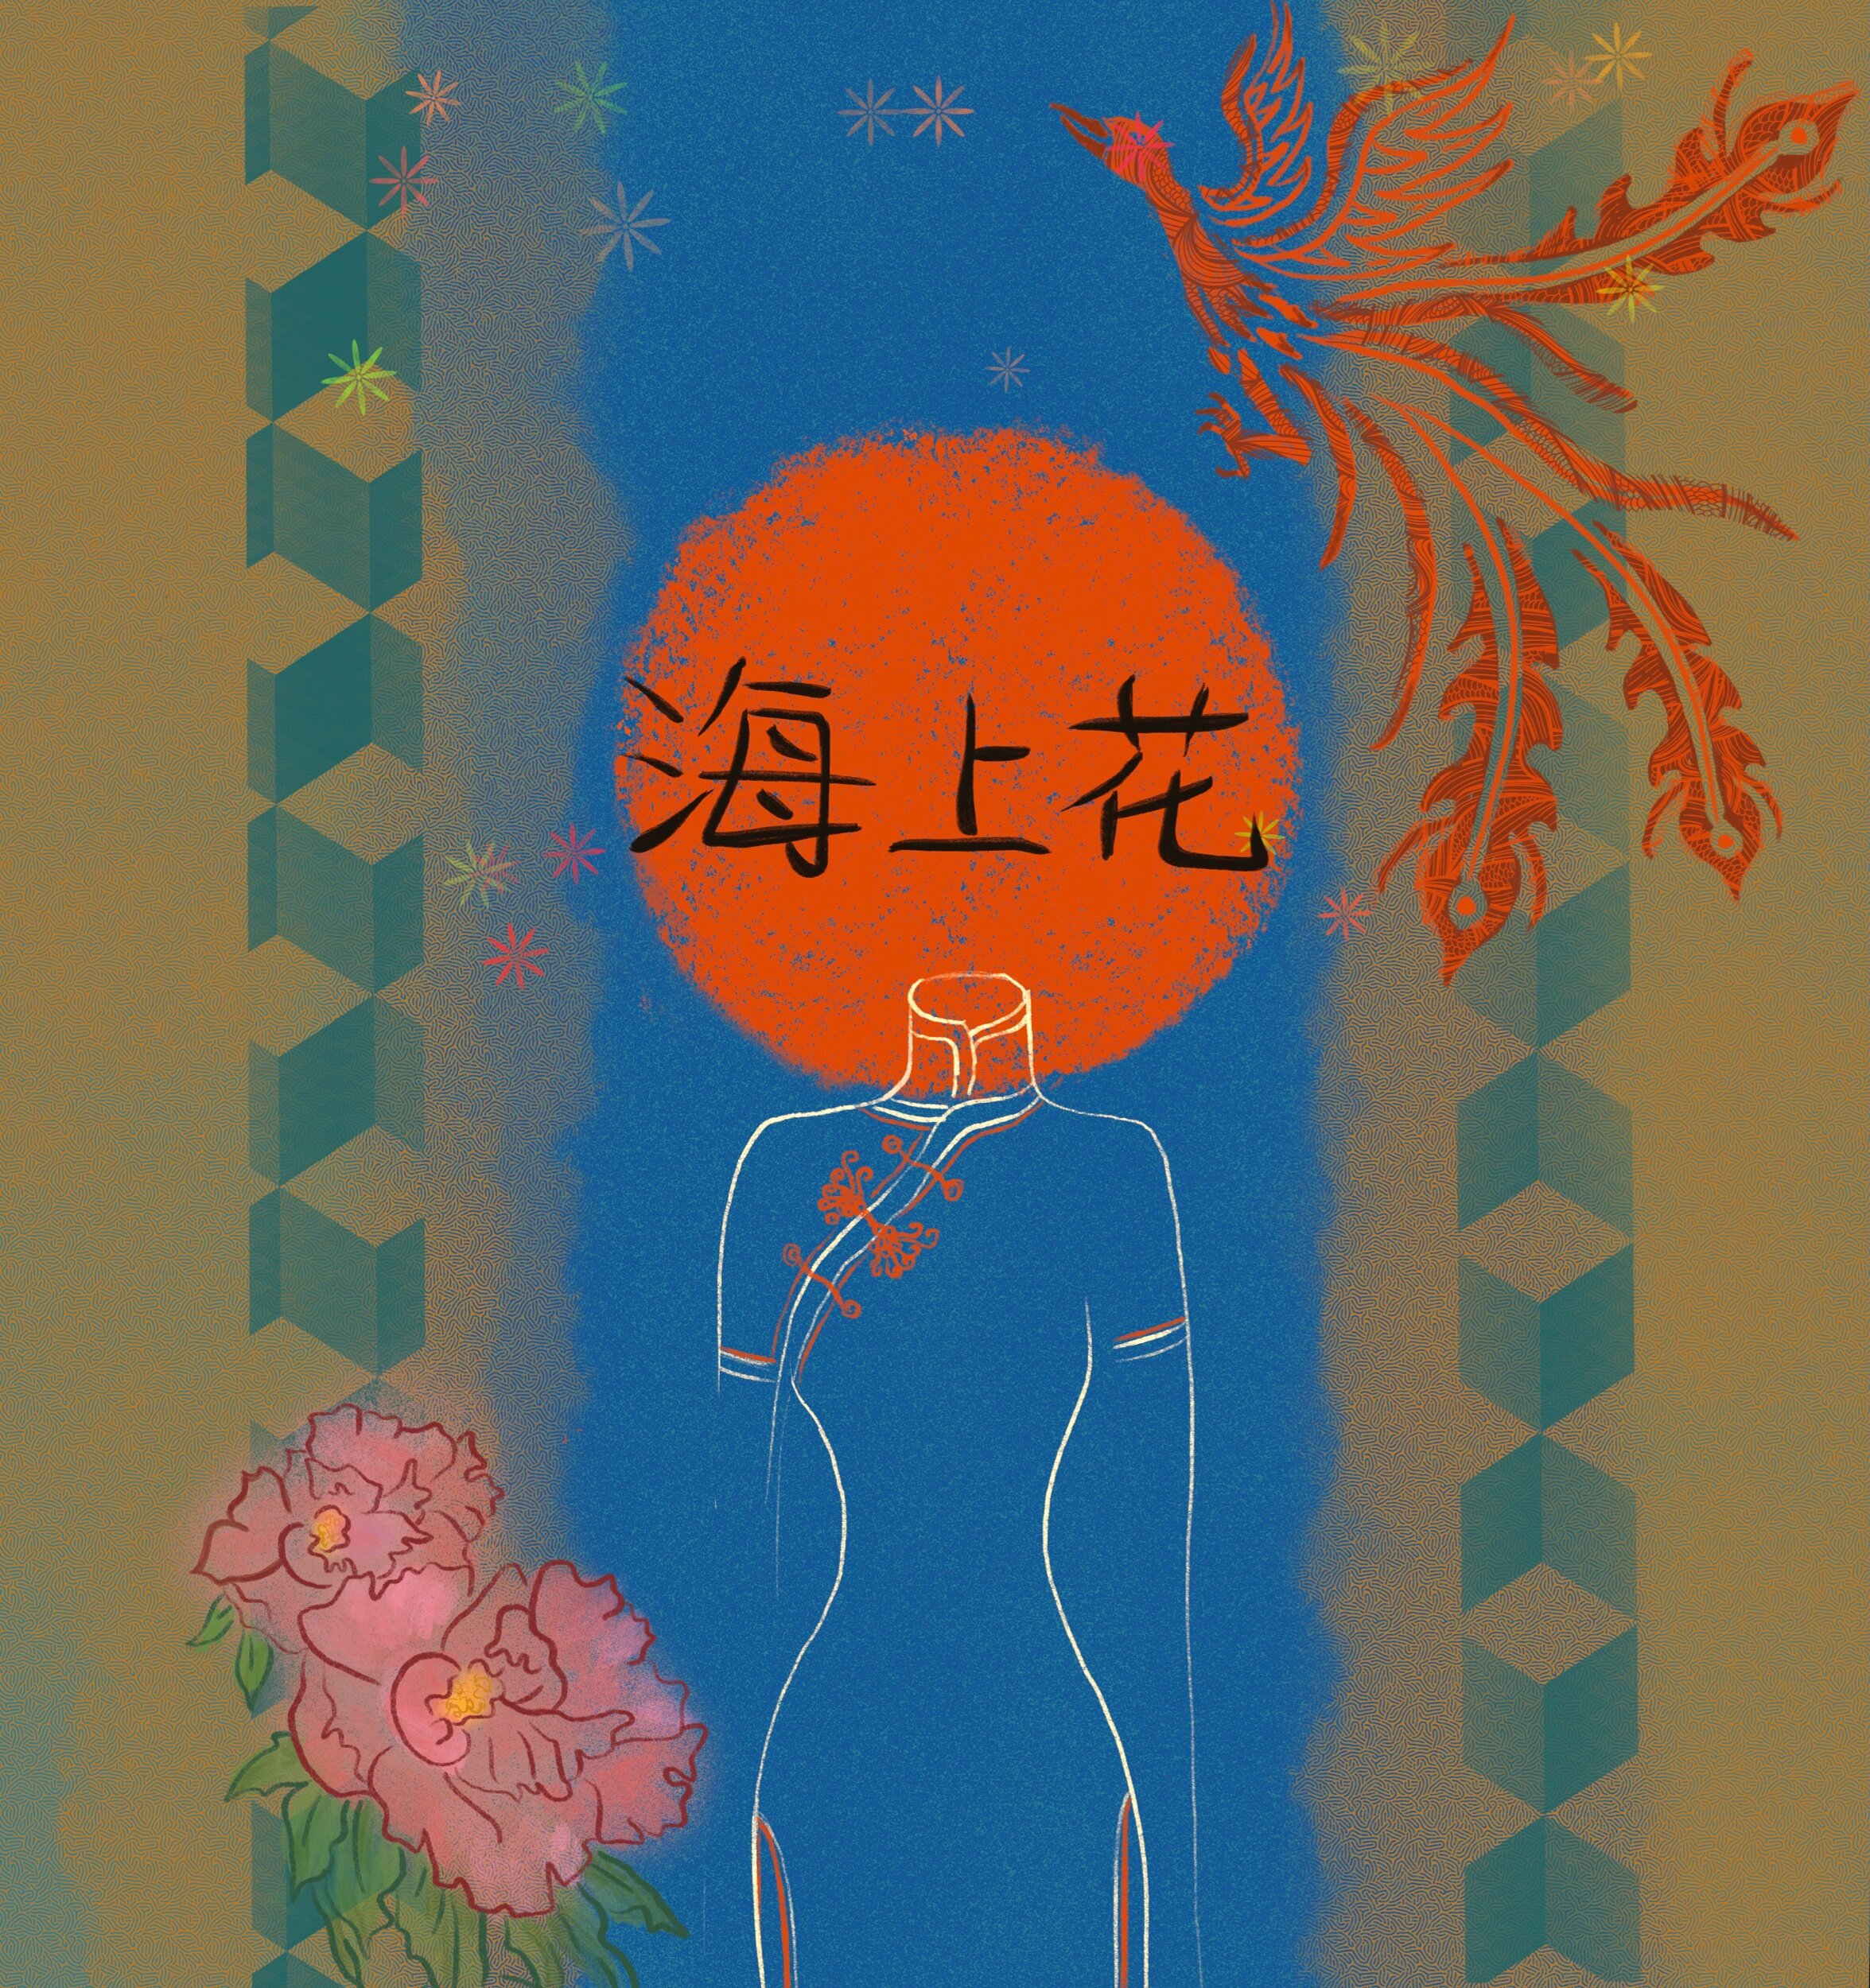 Poster for a documentary film “Shanghai flowers”